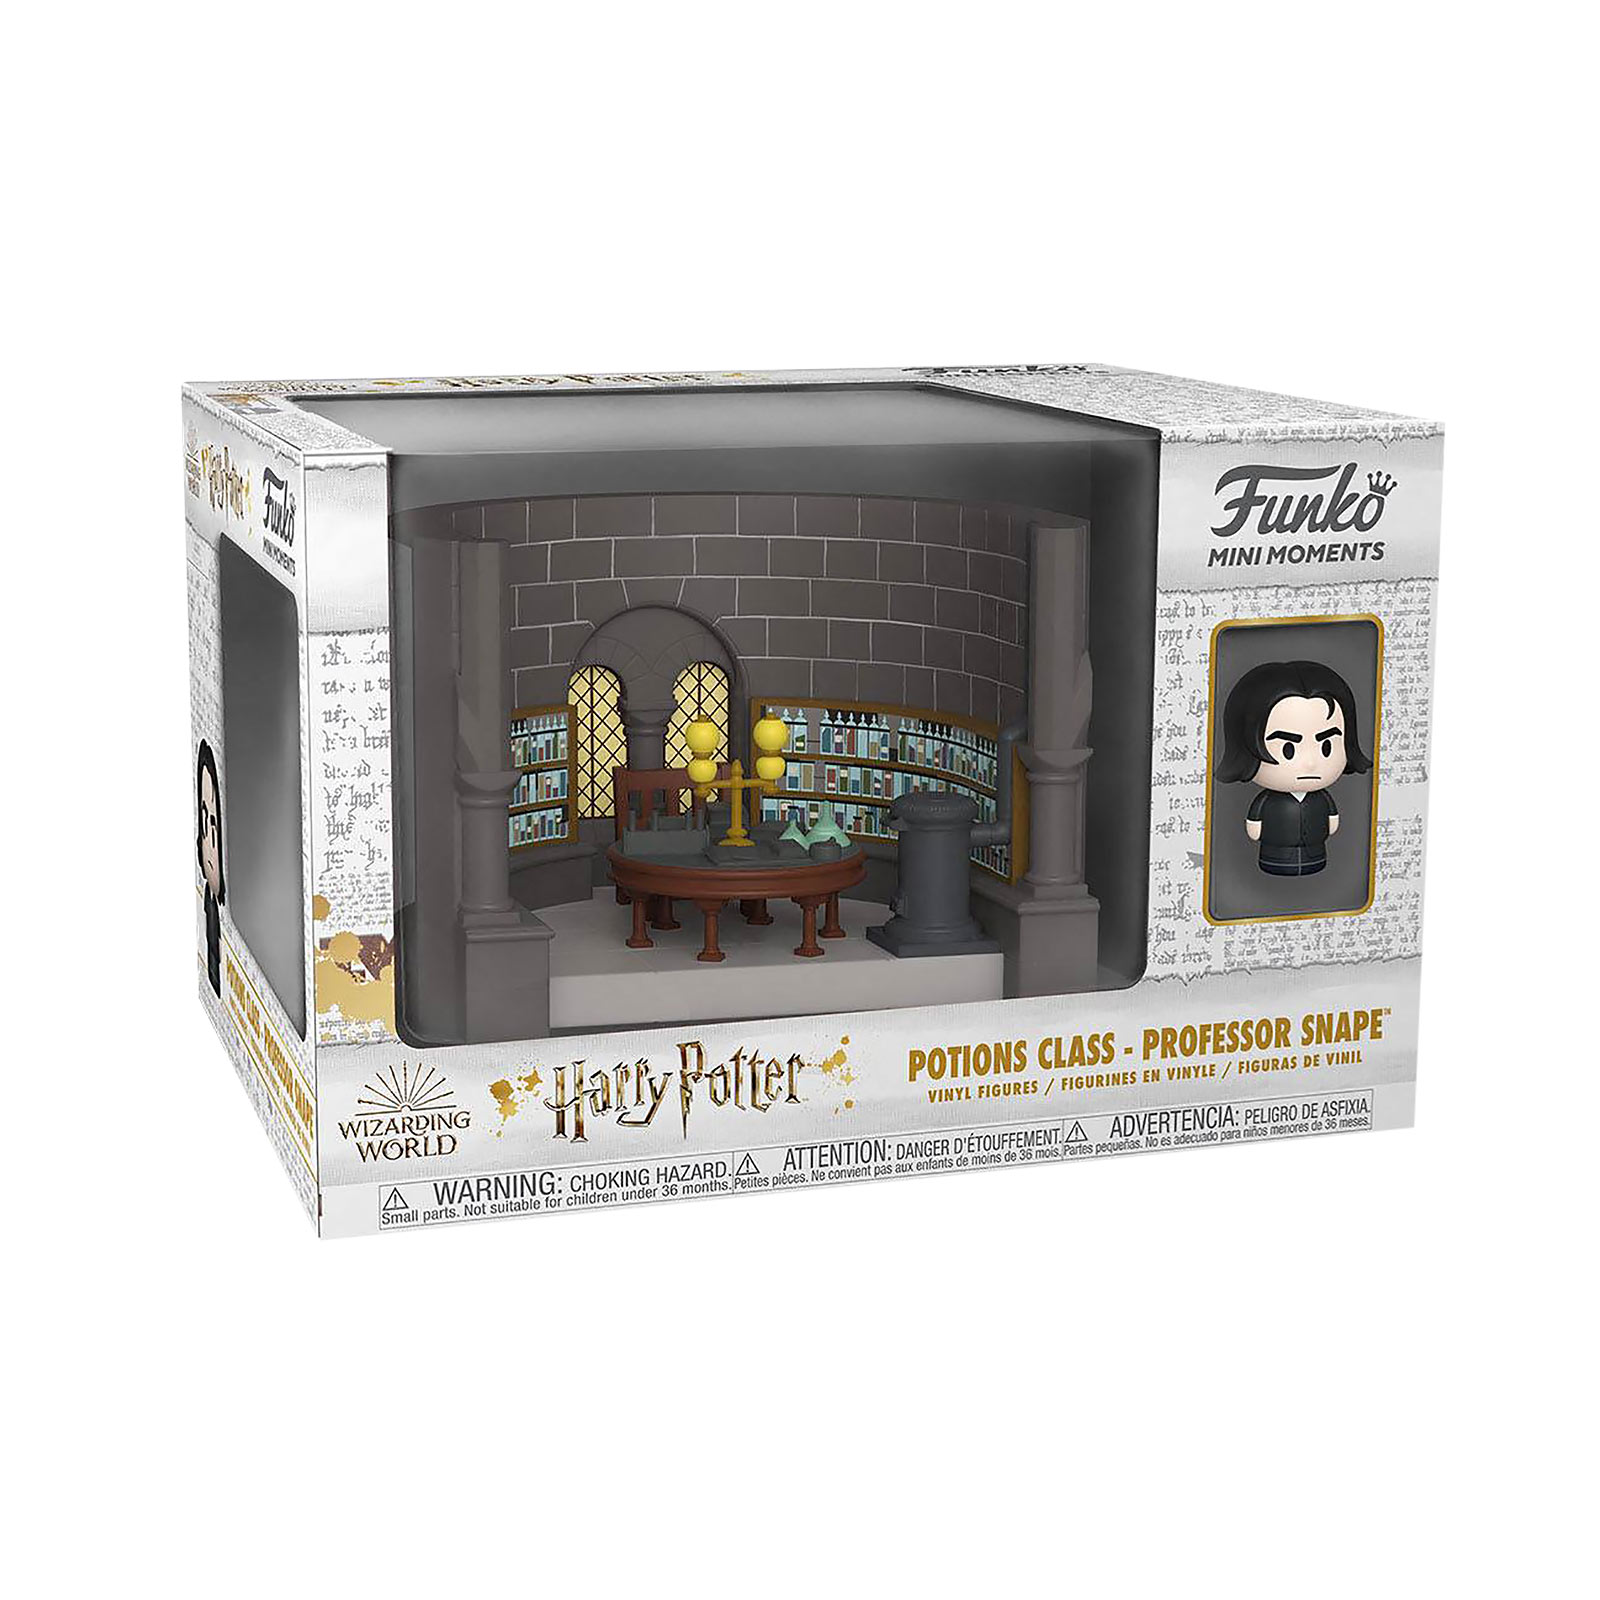 Professor Snape Potion Class Funko Pop Mini Moments Figure - Harry Potter